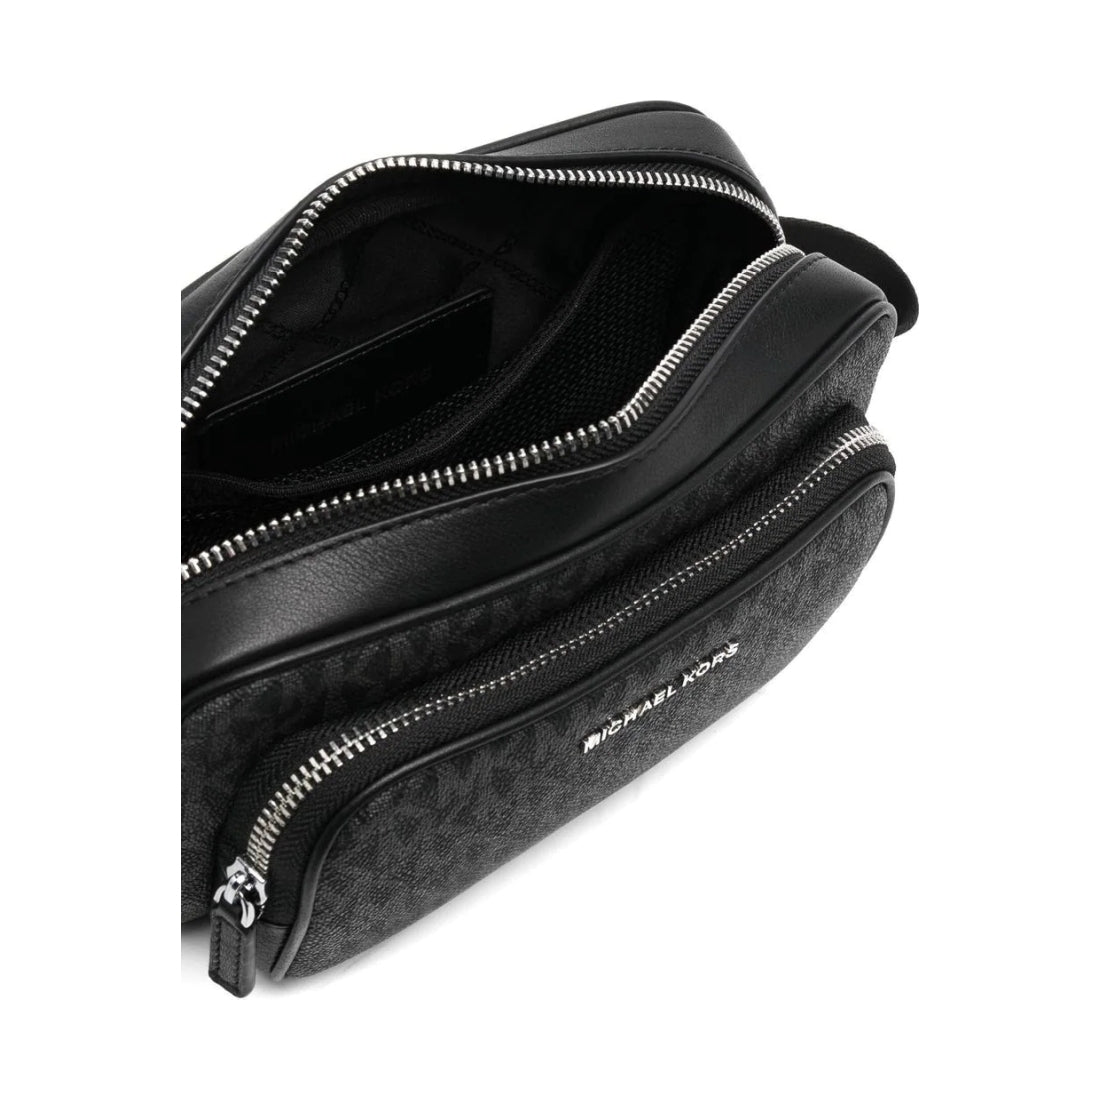 Michael Kors mens black camera bag with pouch | Vilbury London